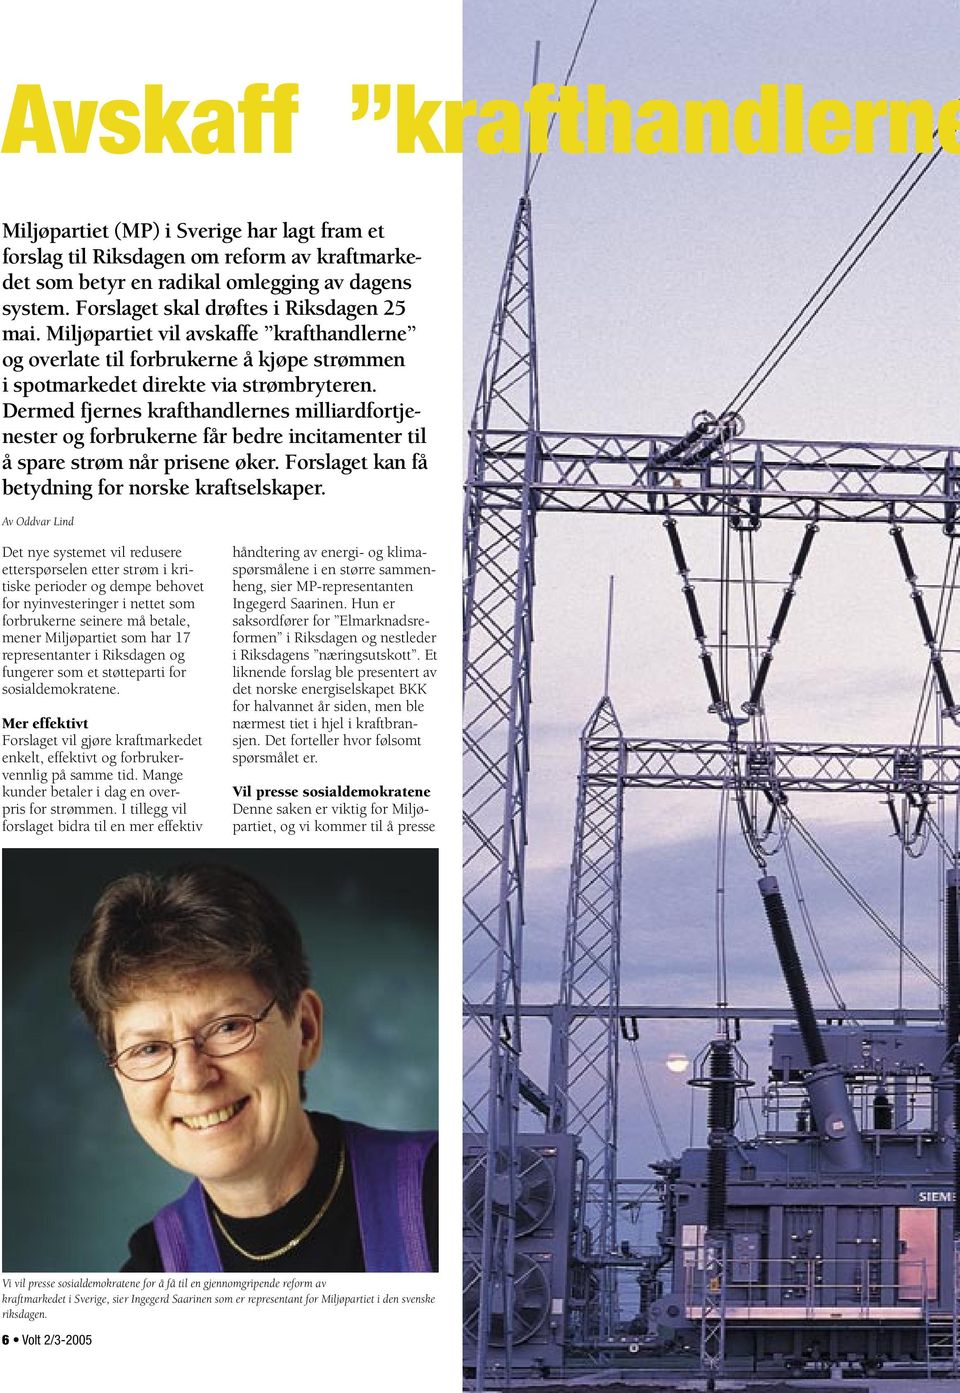 Dermed fjernes krafthandlernes milliardfortjenester og forbrukerne får bedre incitamenter til å spare strøm når prisene øker. Forslaget kan få betydning for norske kraftselskaper.